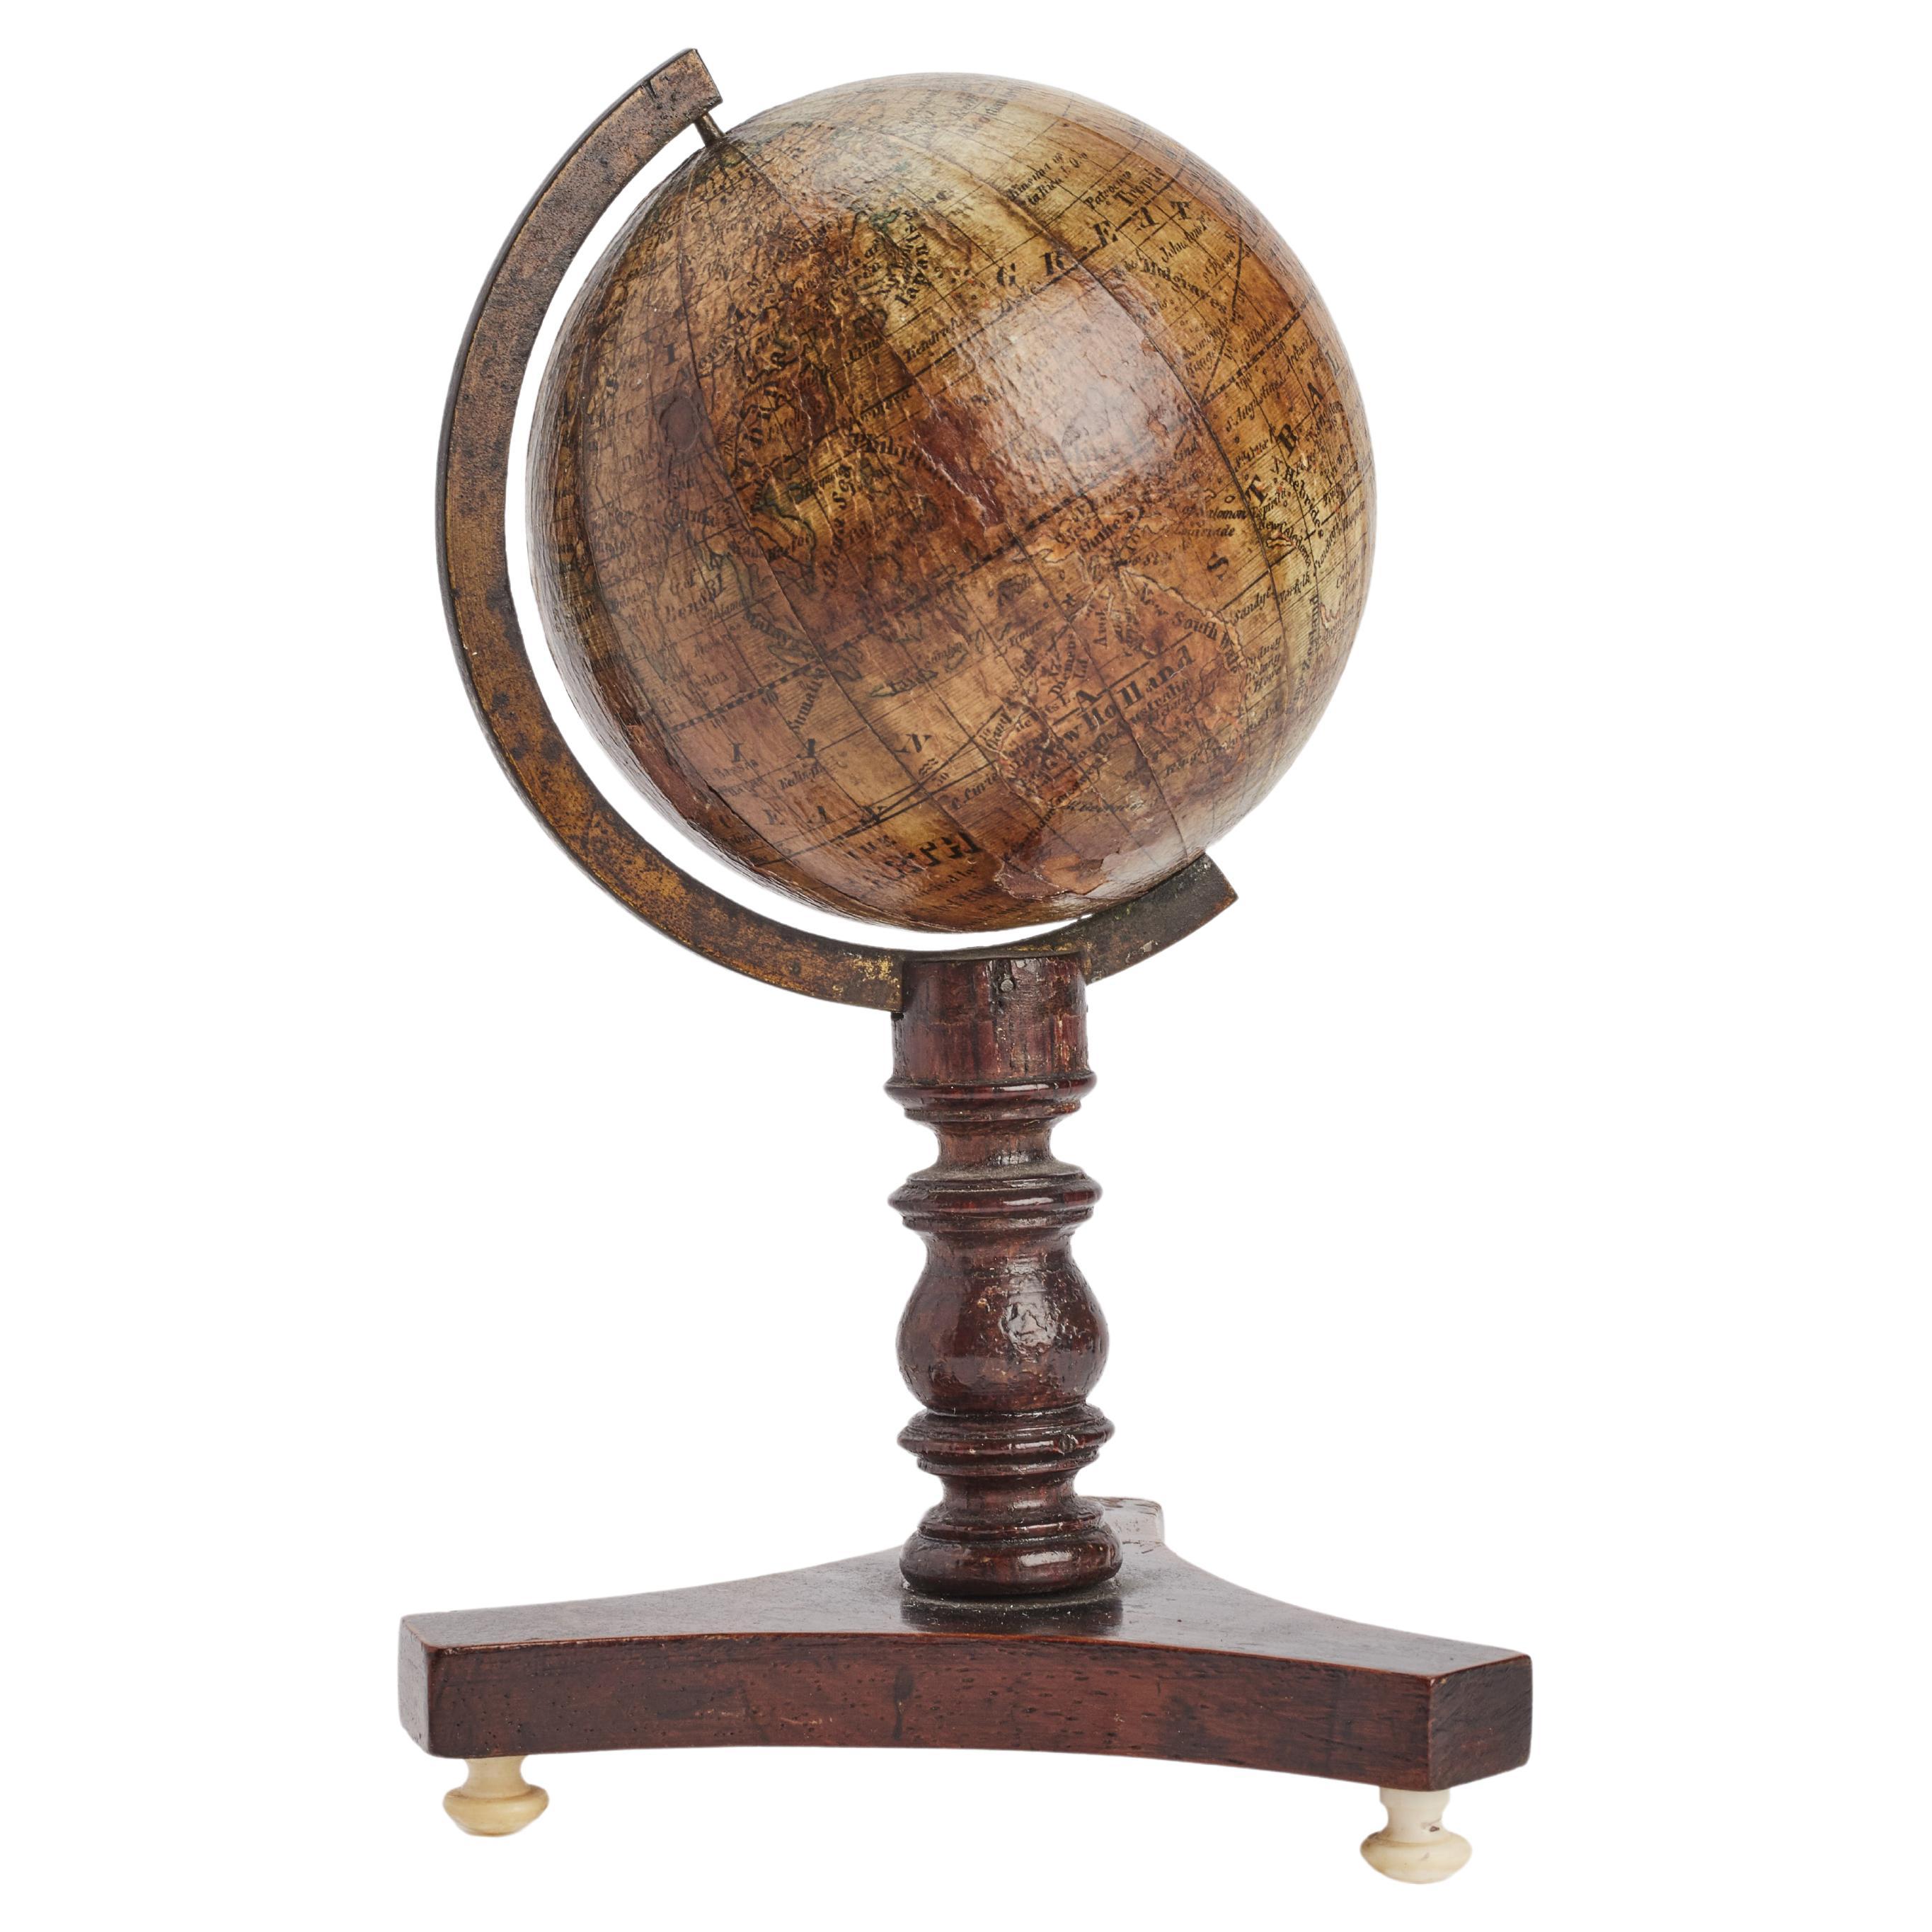 A traveling small globe signed Klinger, Nüremberg 1820.  For Sale